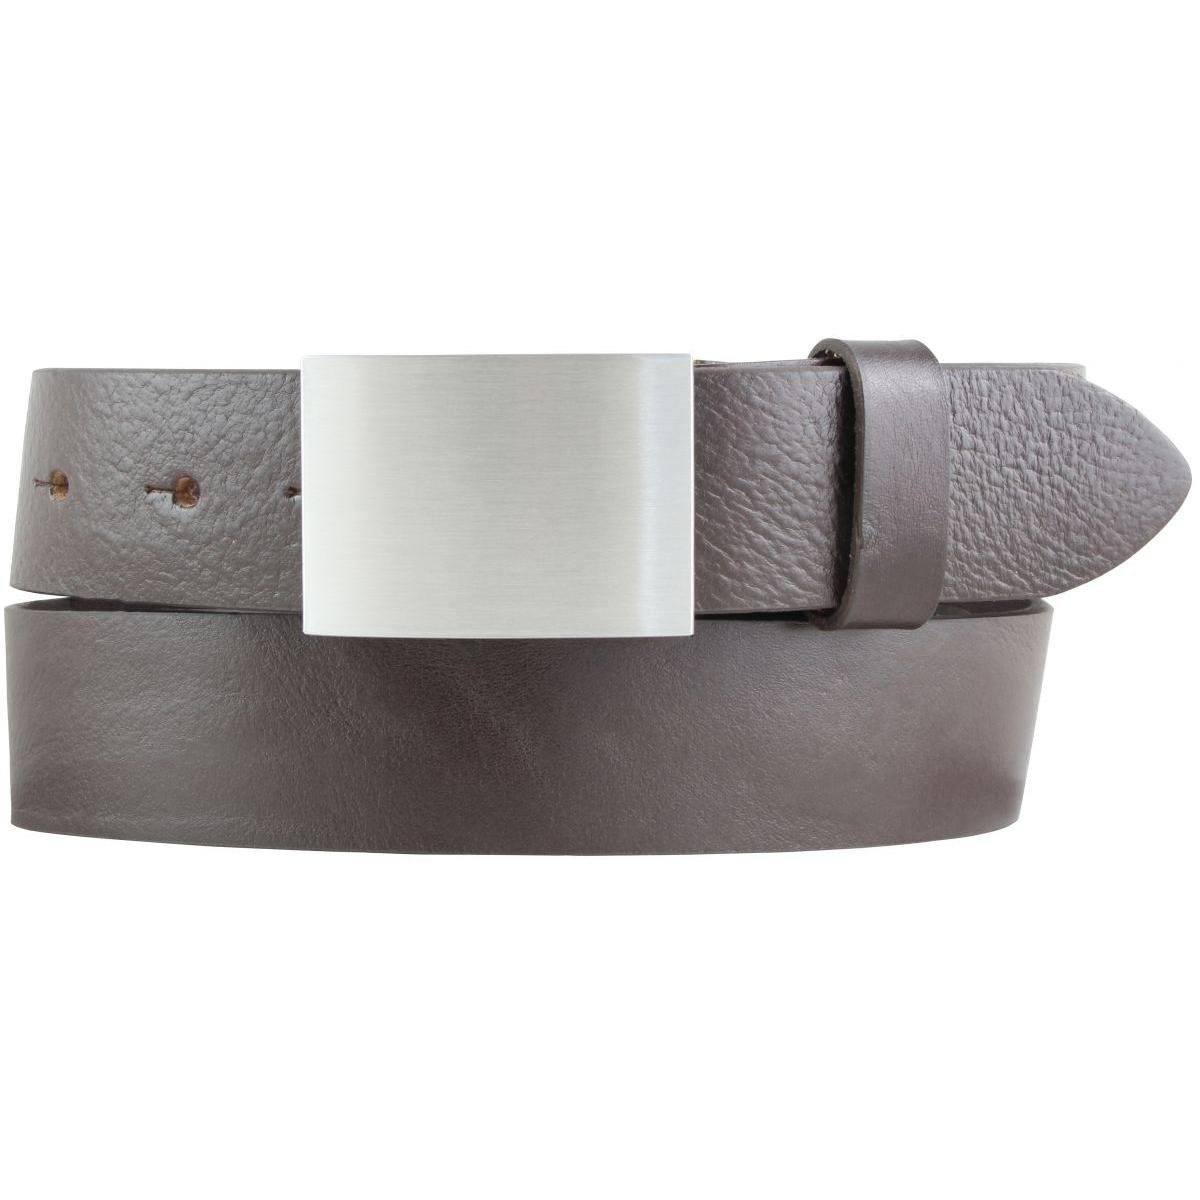 BELTINGER Ledergürtel Gürtel aus Vollrindleder 3,5 cm - Jeans-Gürtel für Damen Herren 35mm - Braun, Silber